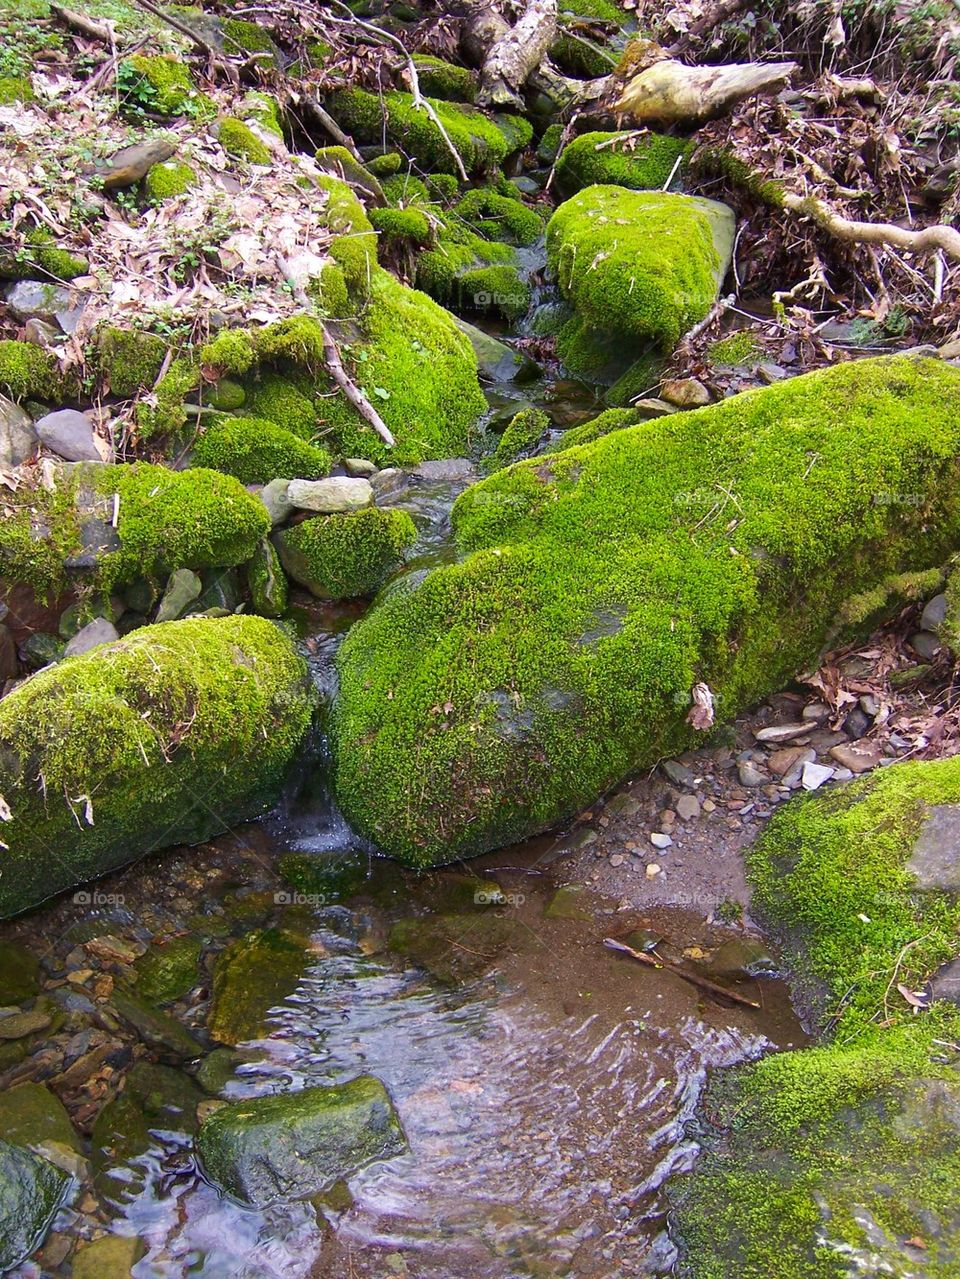 Rock moss